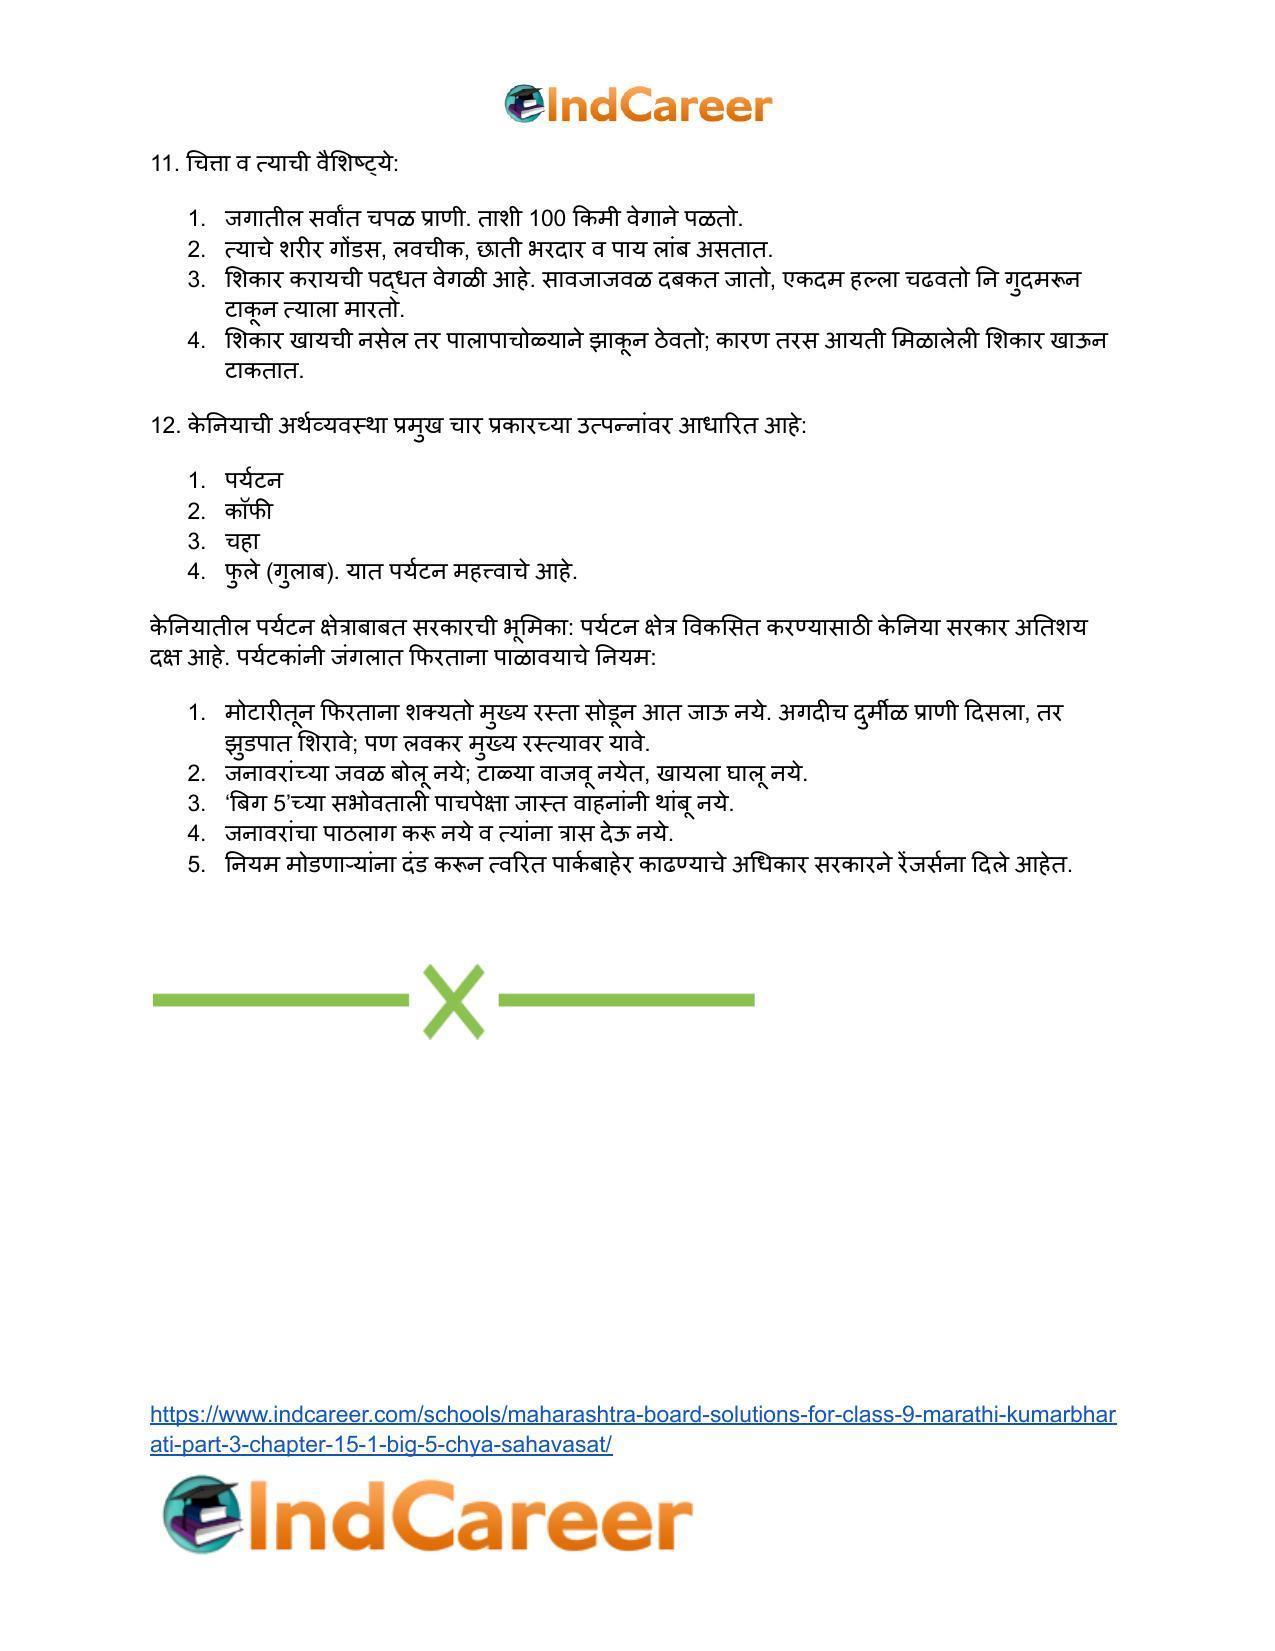 Maharashtra Board Solutions for Class 9- Marathi Kumarbharati (Part- 3): Chapter 15.1- ‘बिग 5’ च्या सहवासात - Page 7